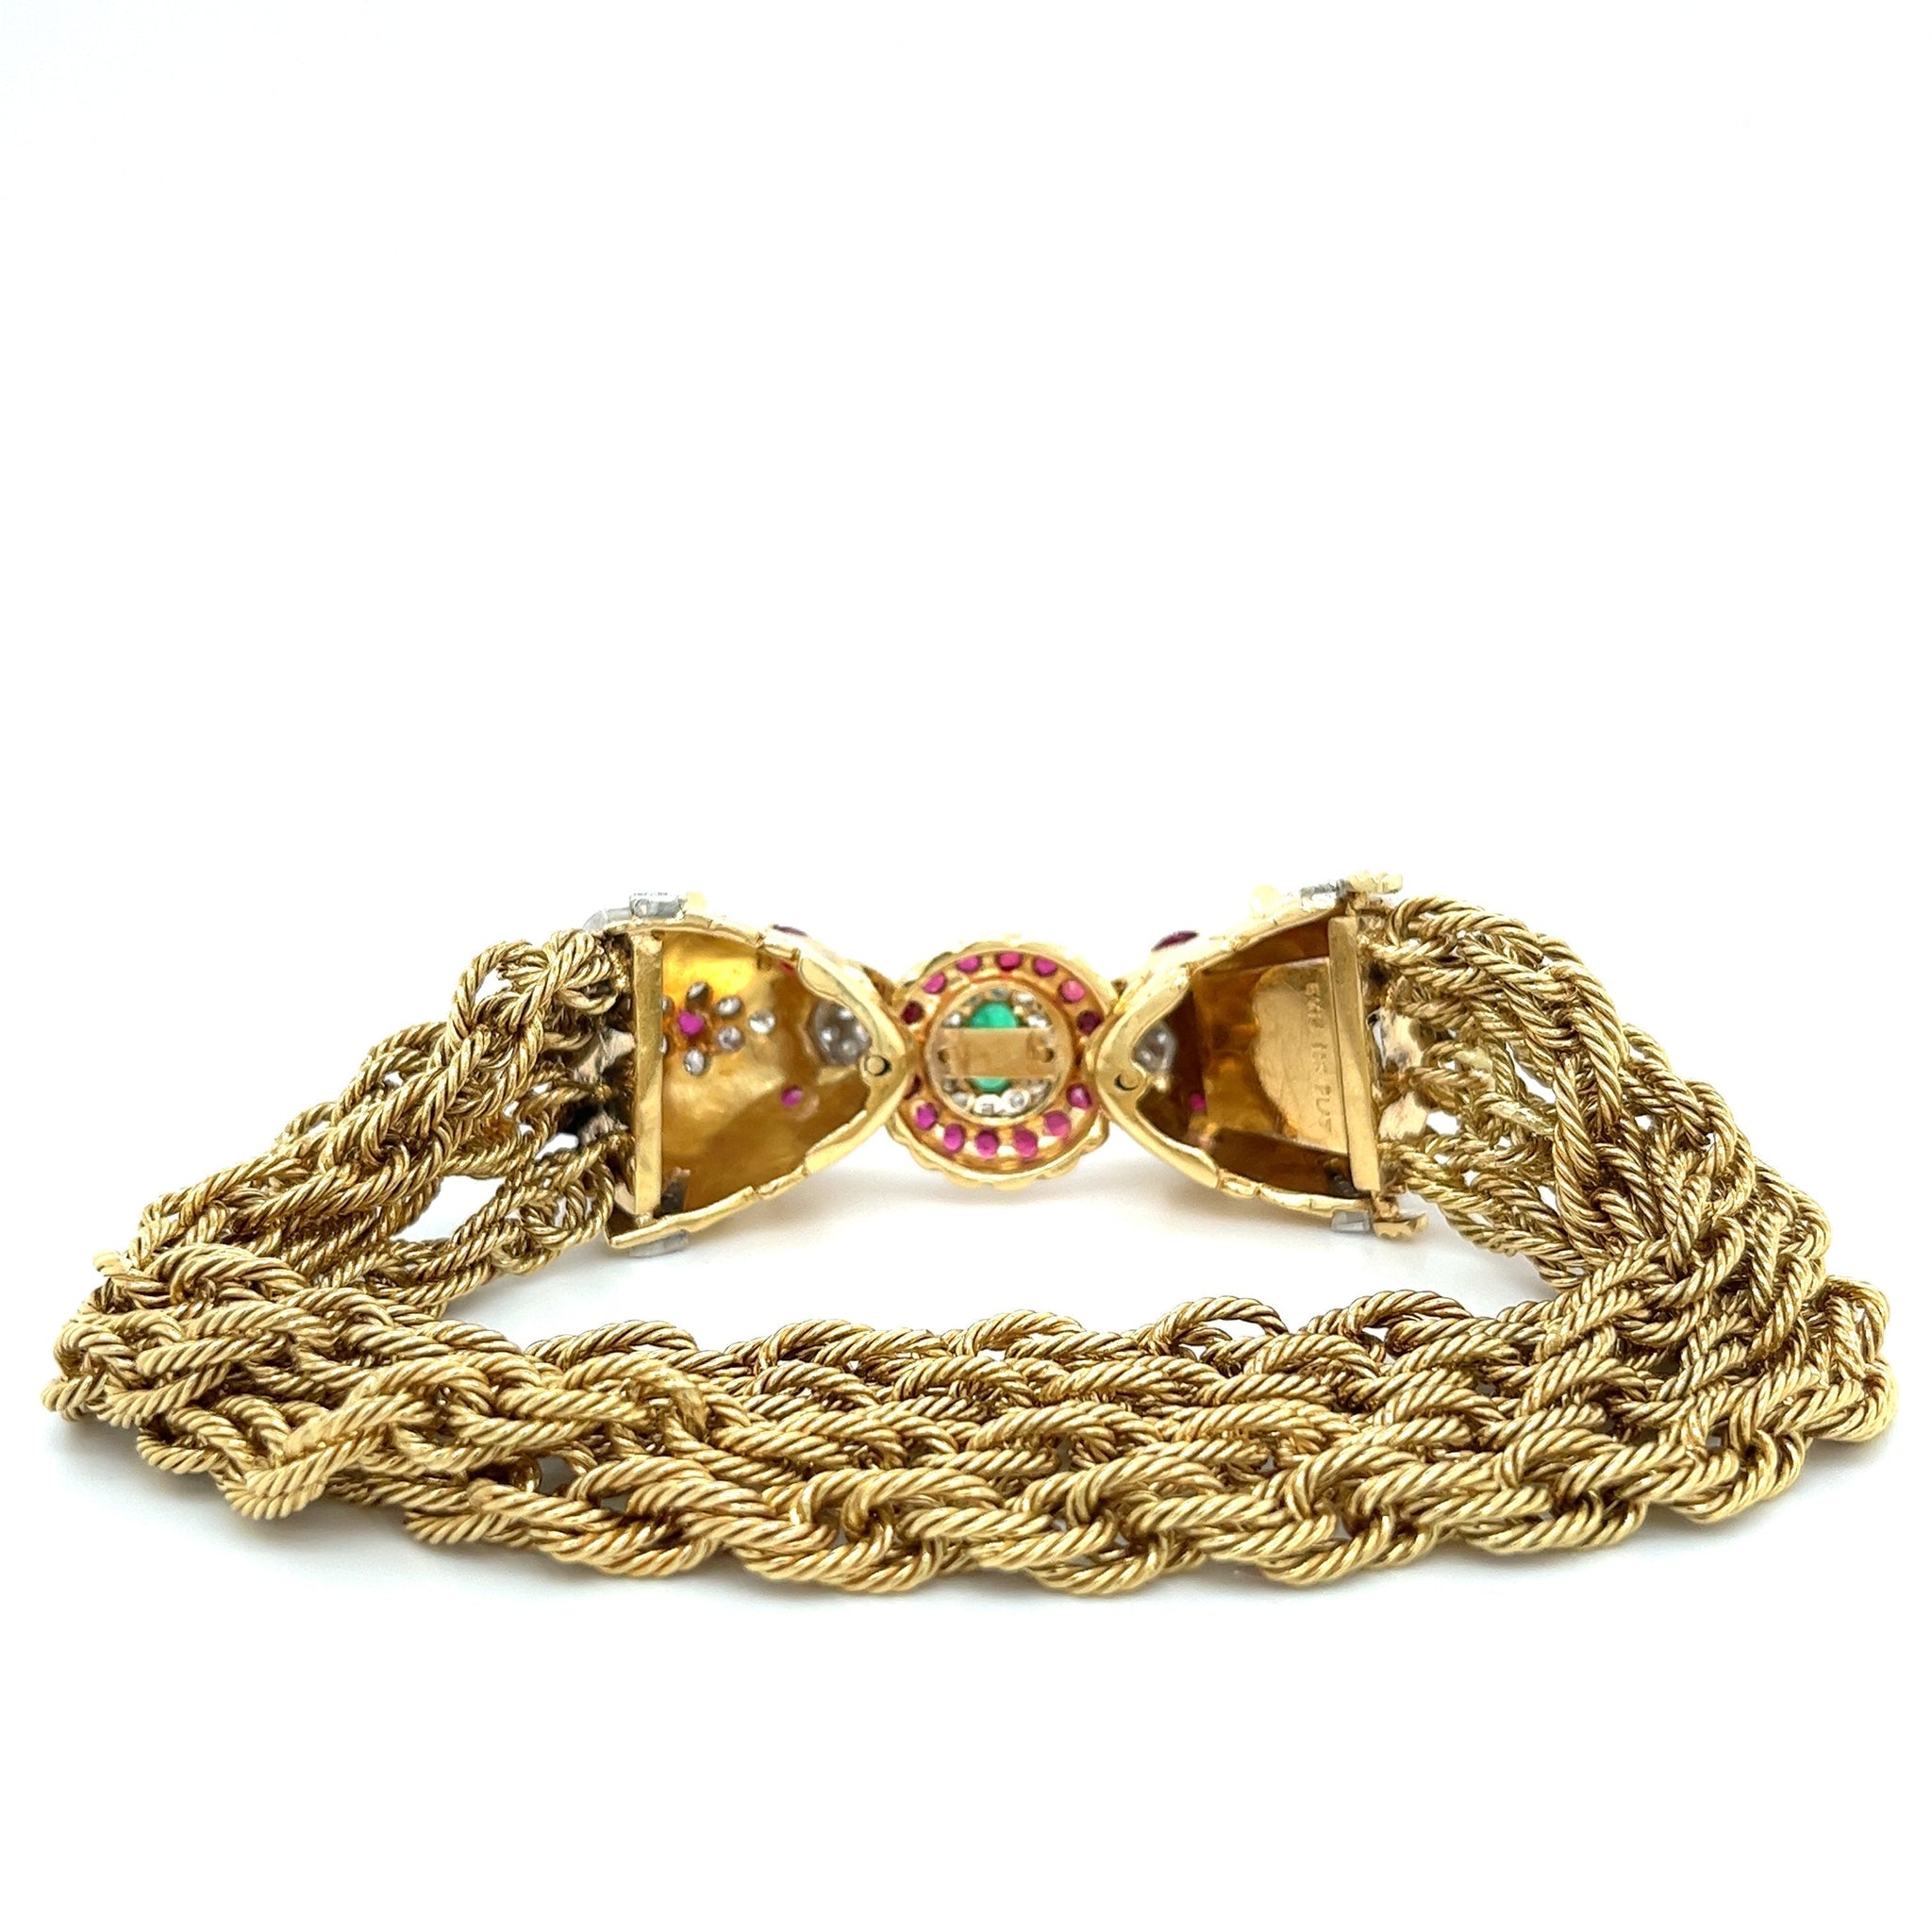 Buy 18K Solid Gold Rope Chain Bracelet Yellow 18K Rope Bracelet